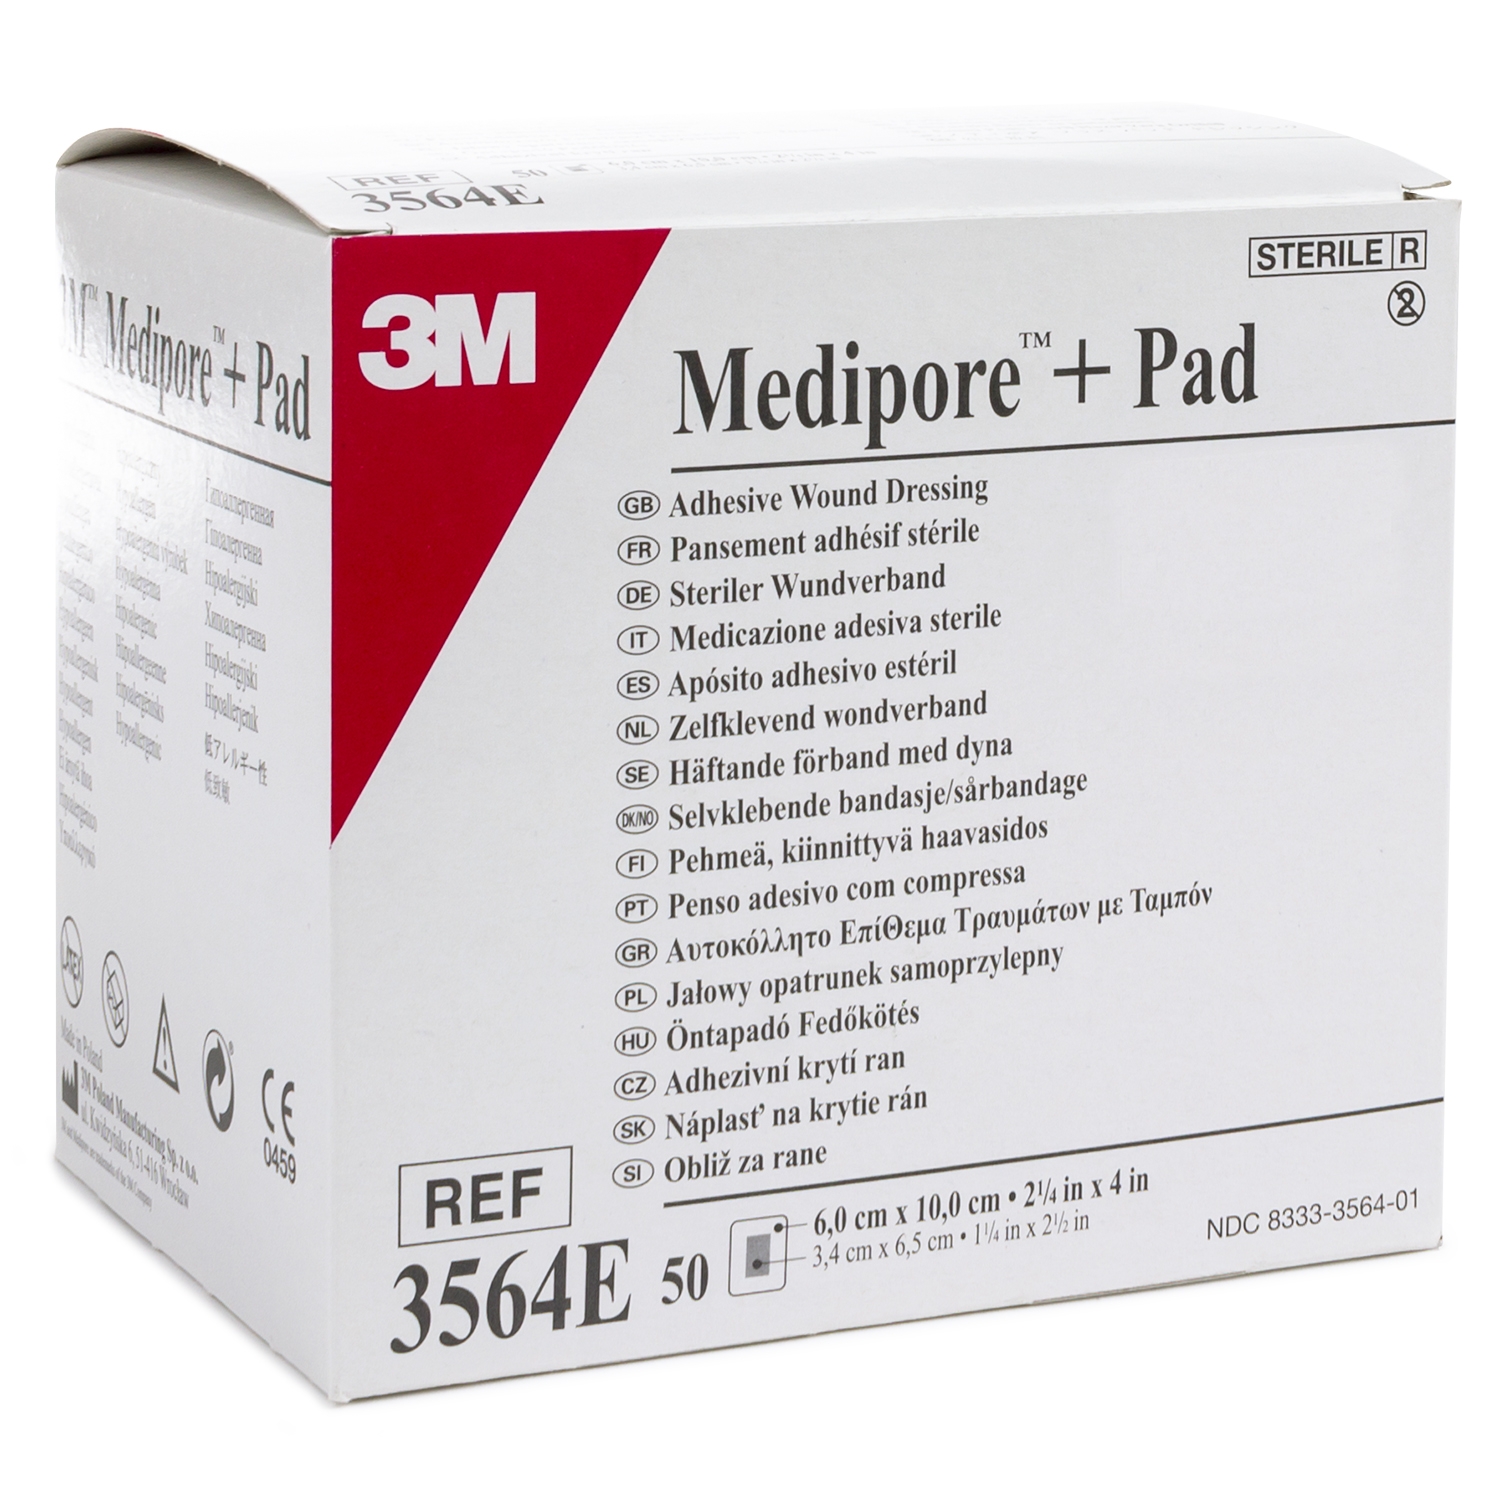 Medipore + pad - 6 x 10 cm (50 st)